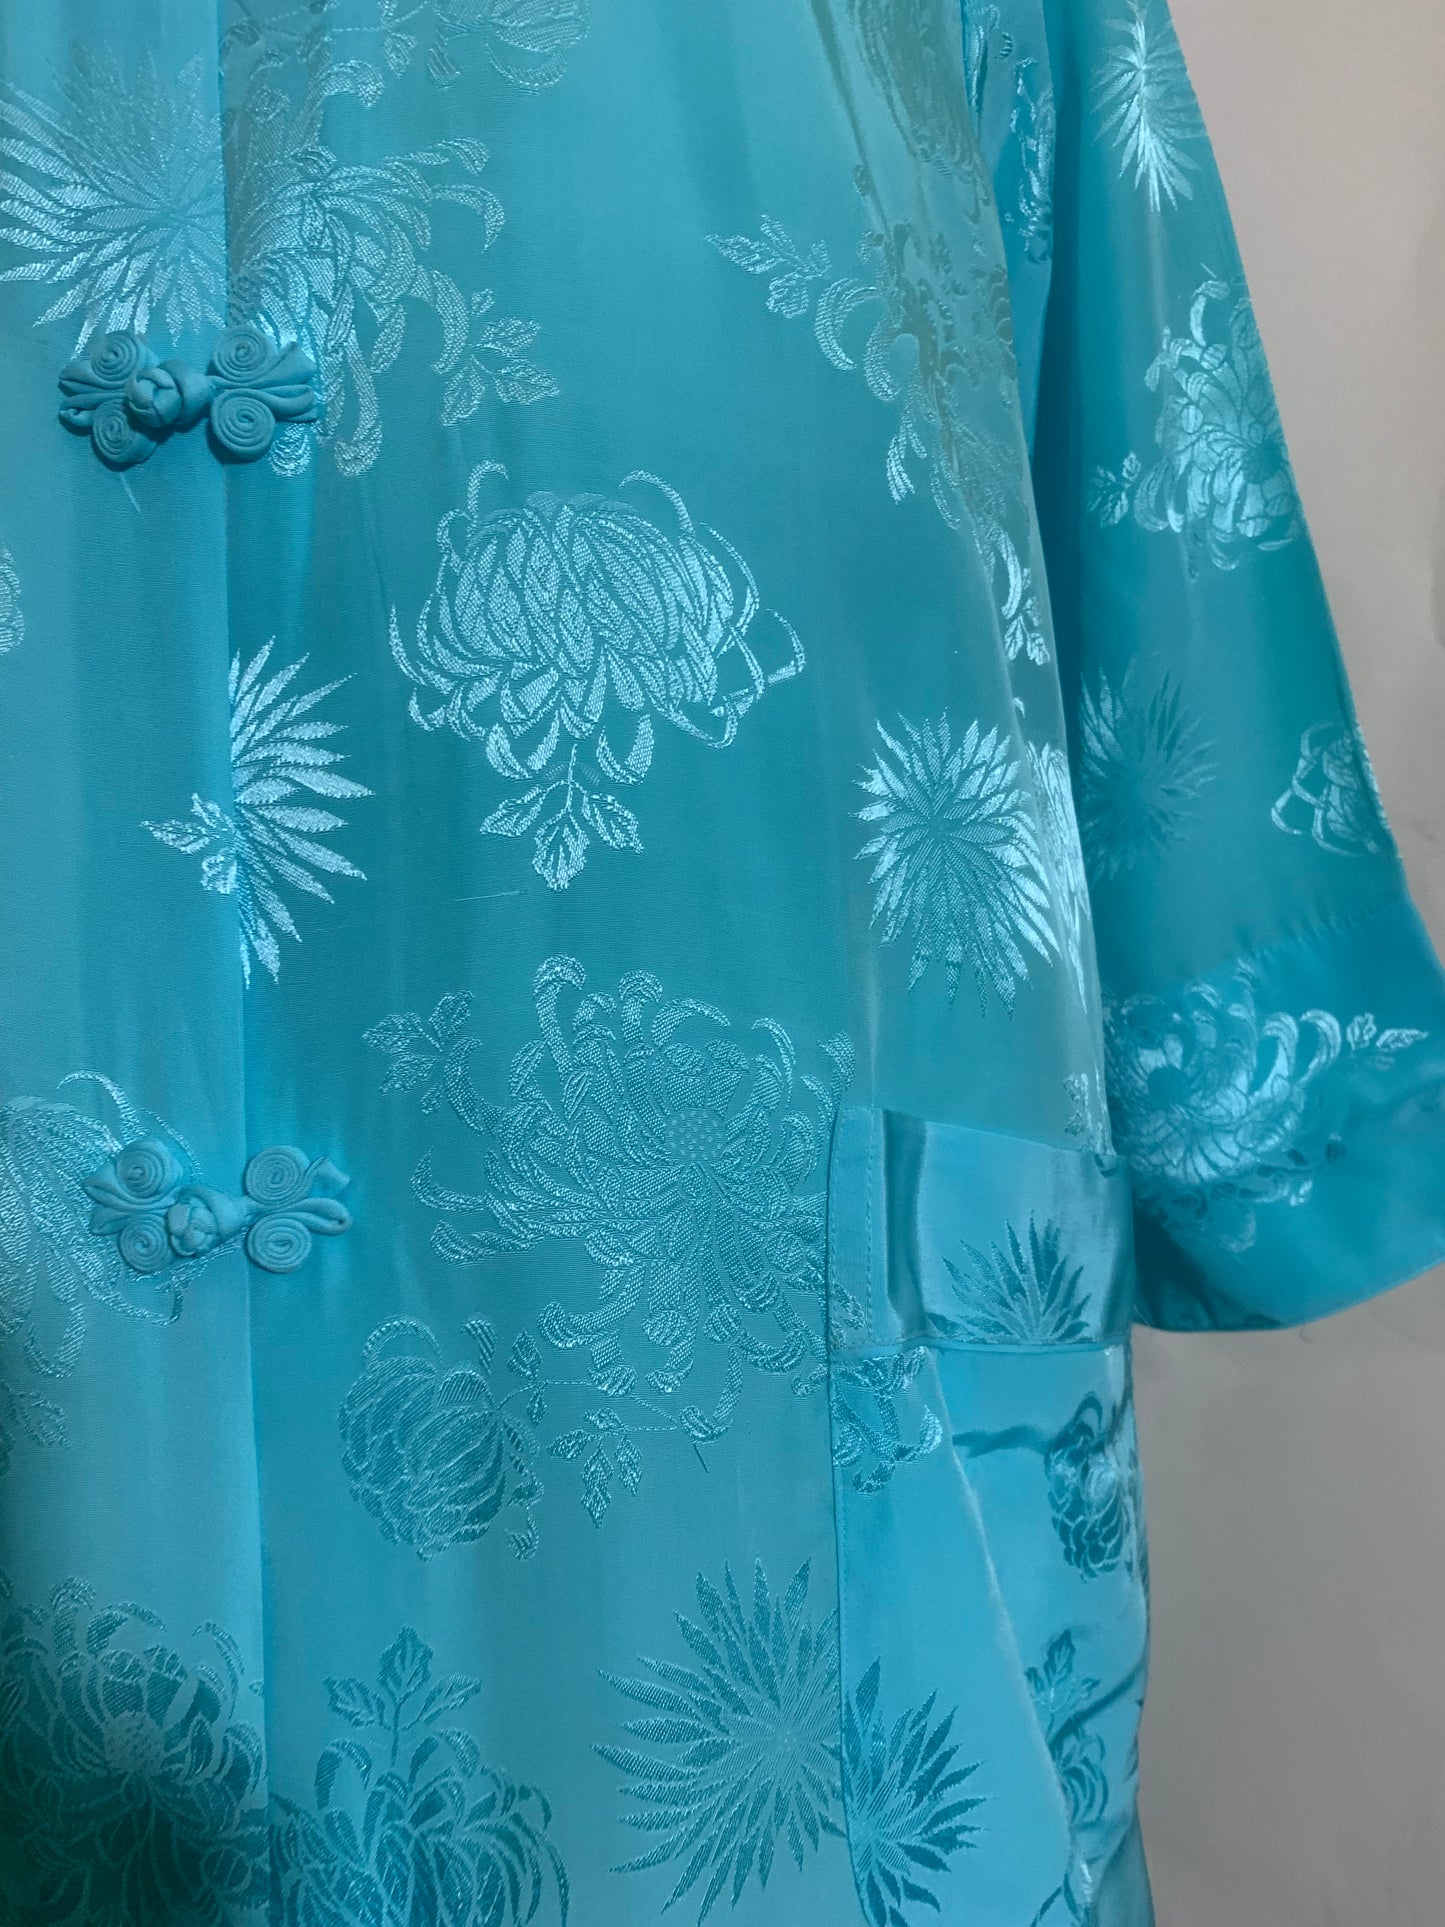 Turquoise Asian Style Rayon Robe circa 1960s